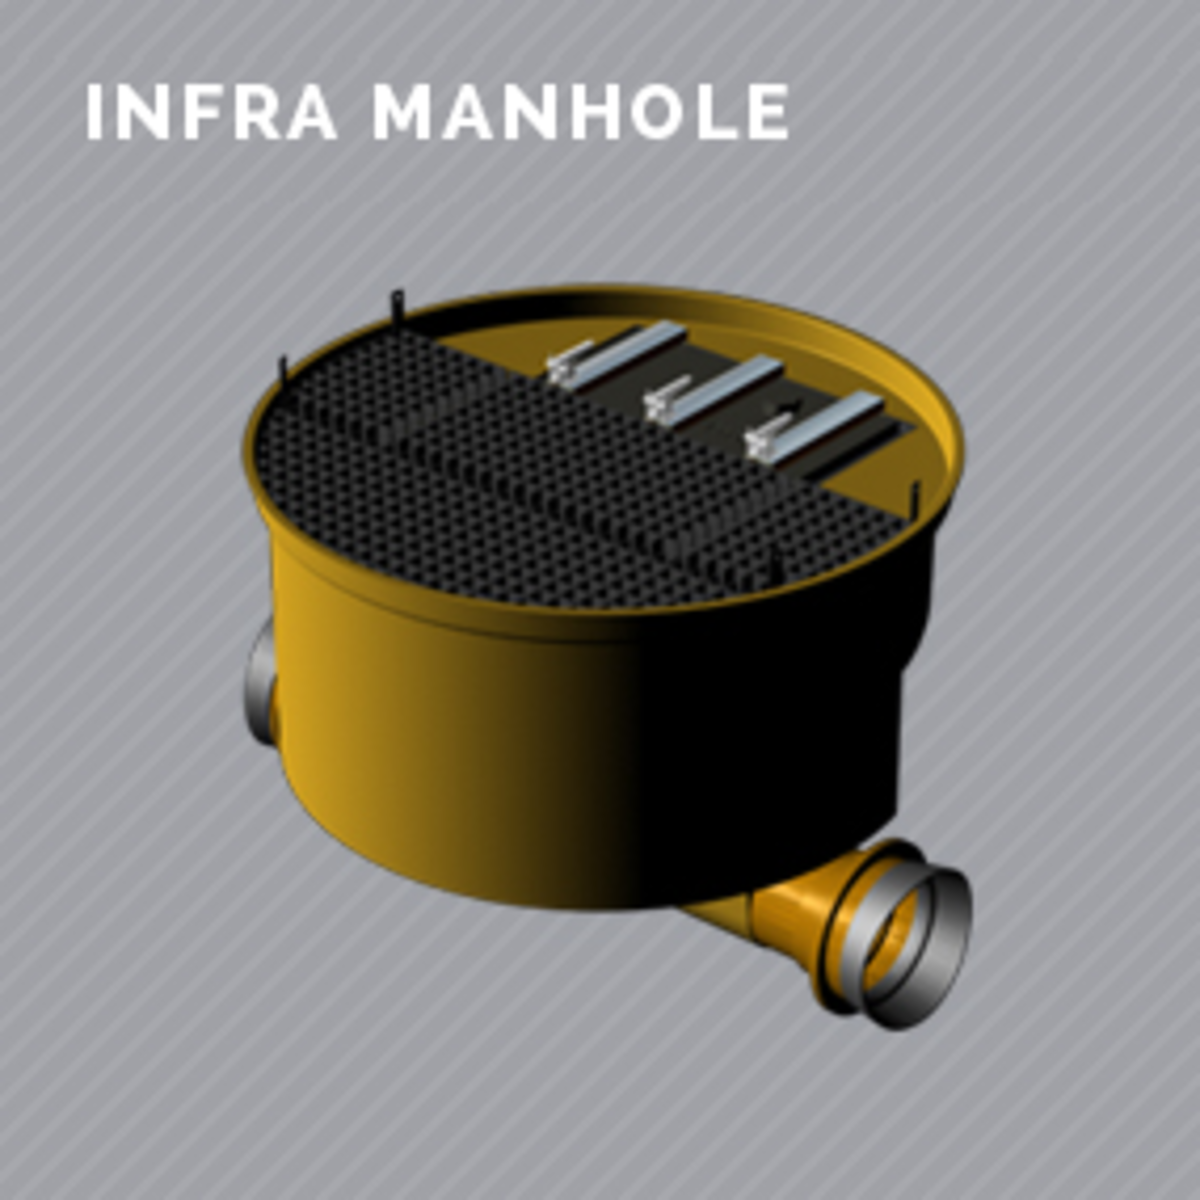 infra manhole drawings